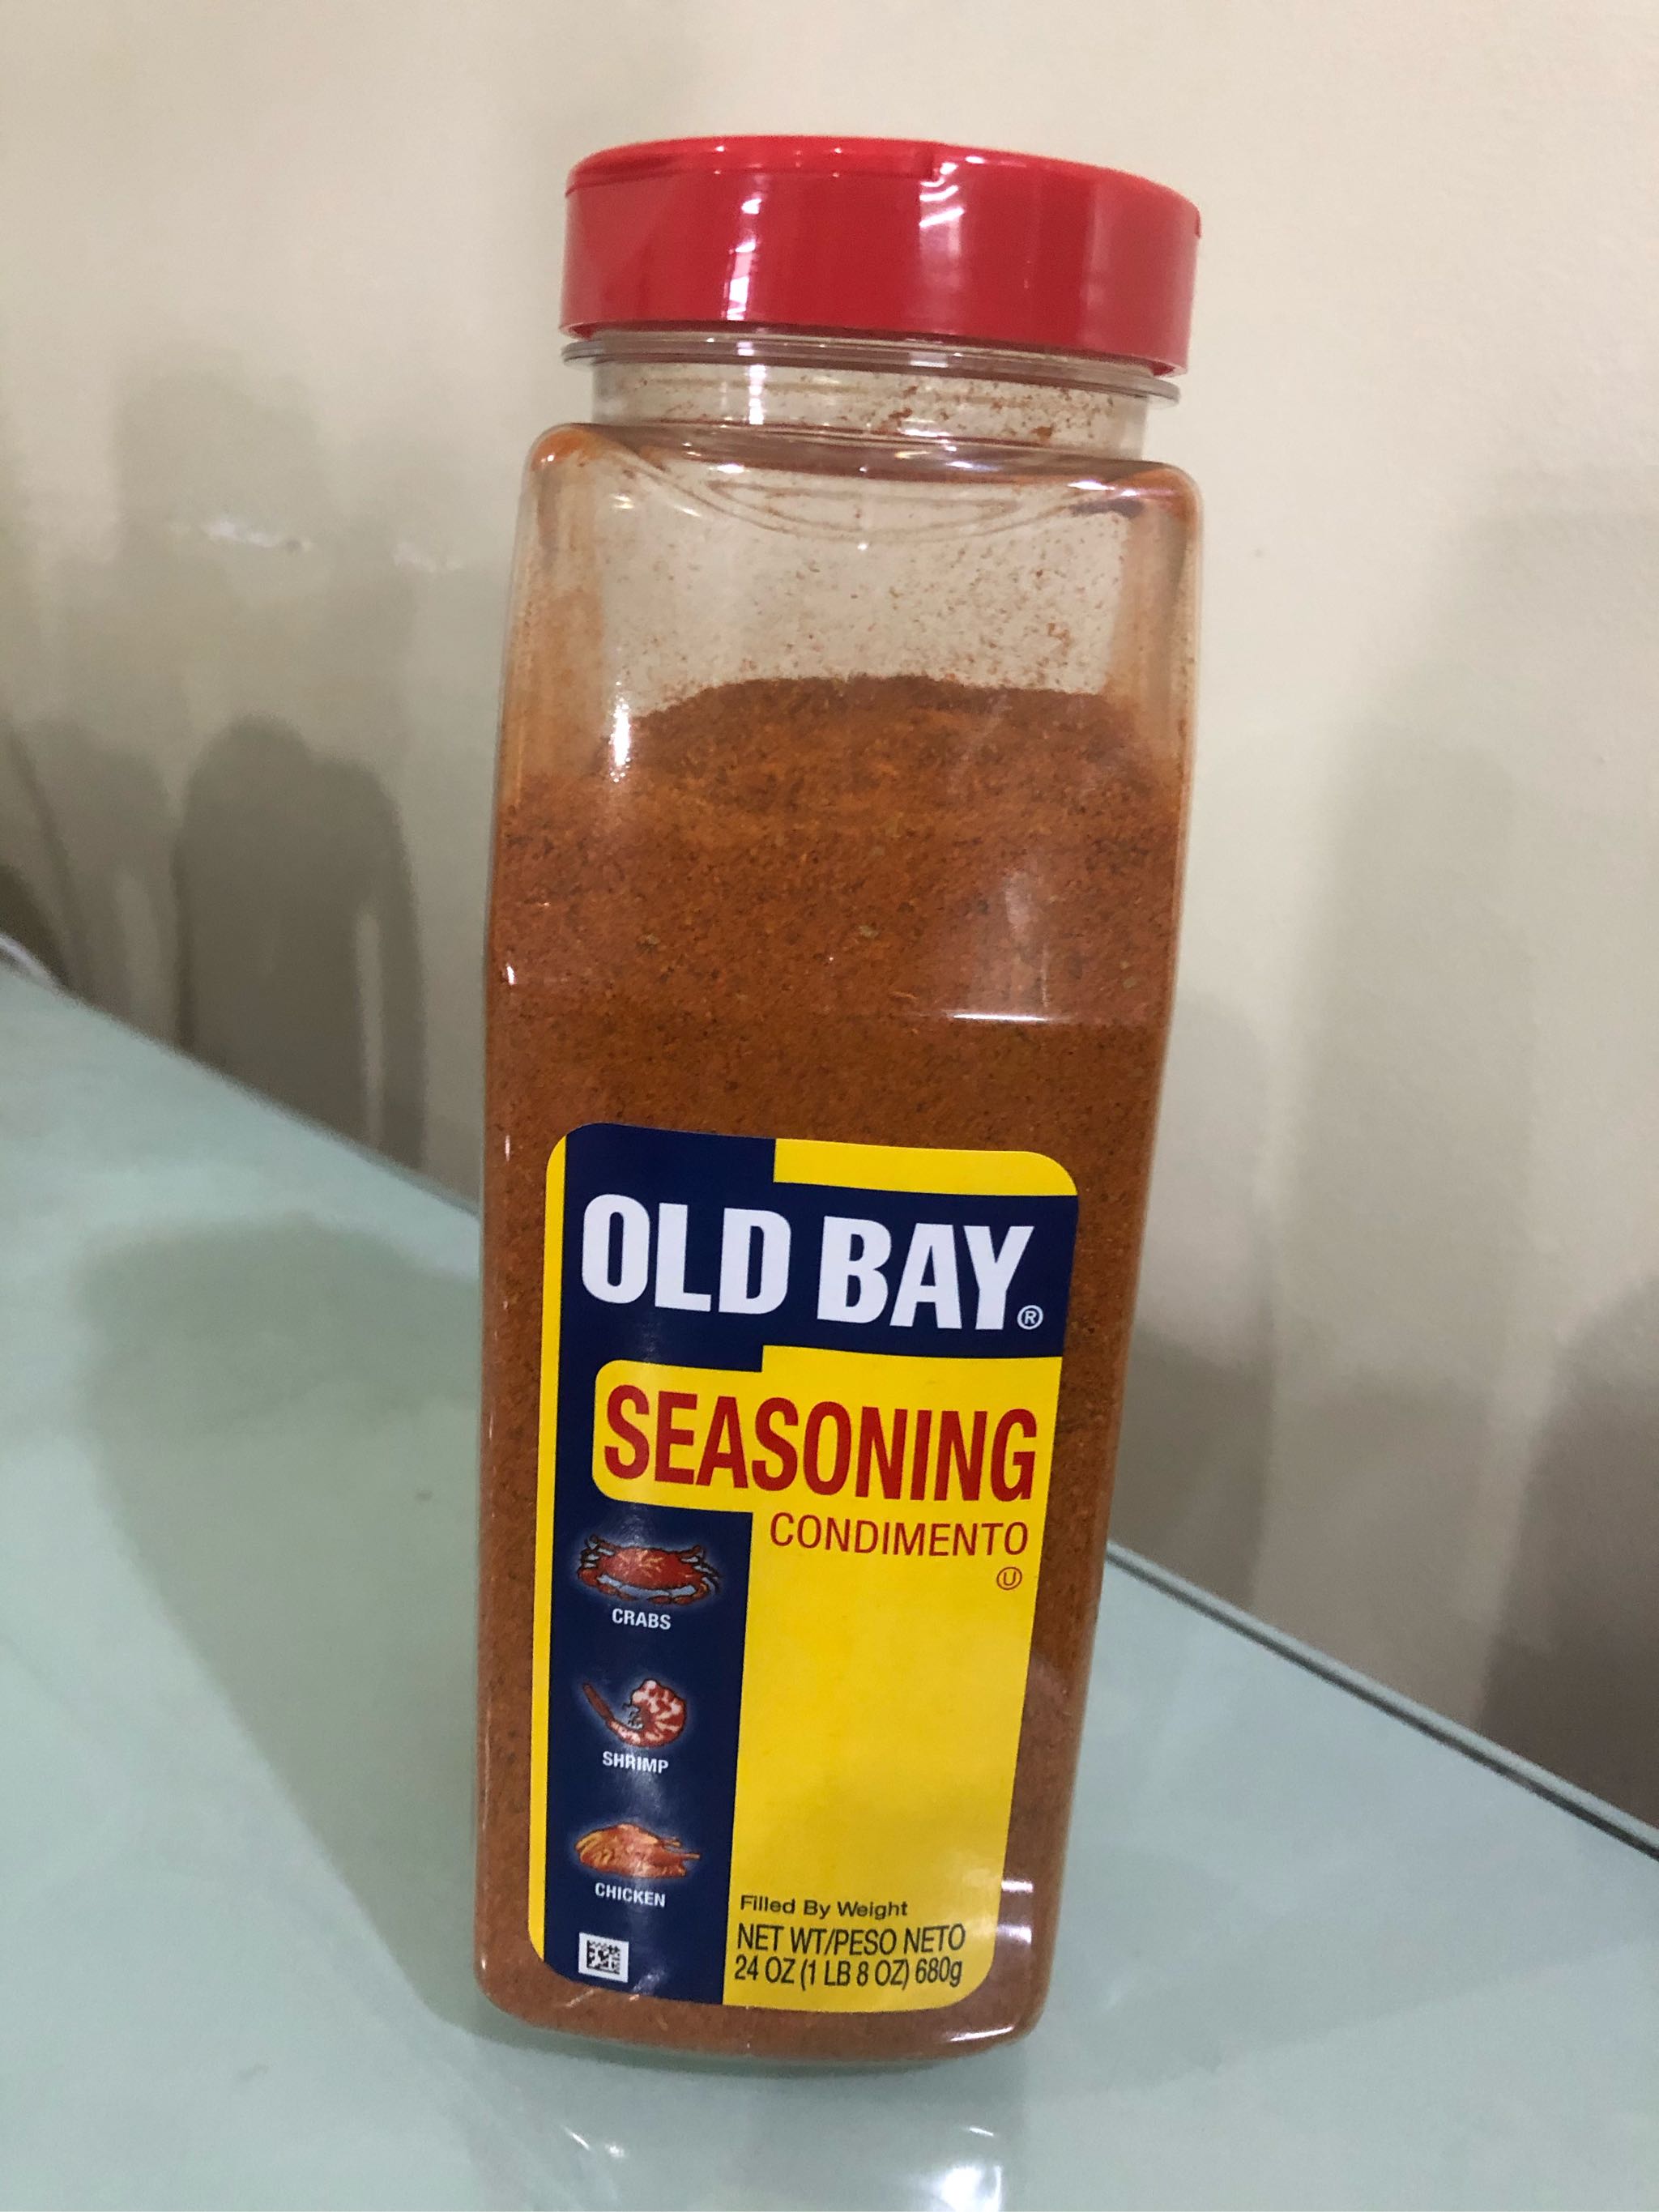 OLD BAY Seasoning, 24 oz